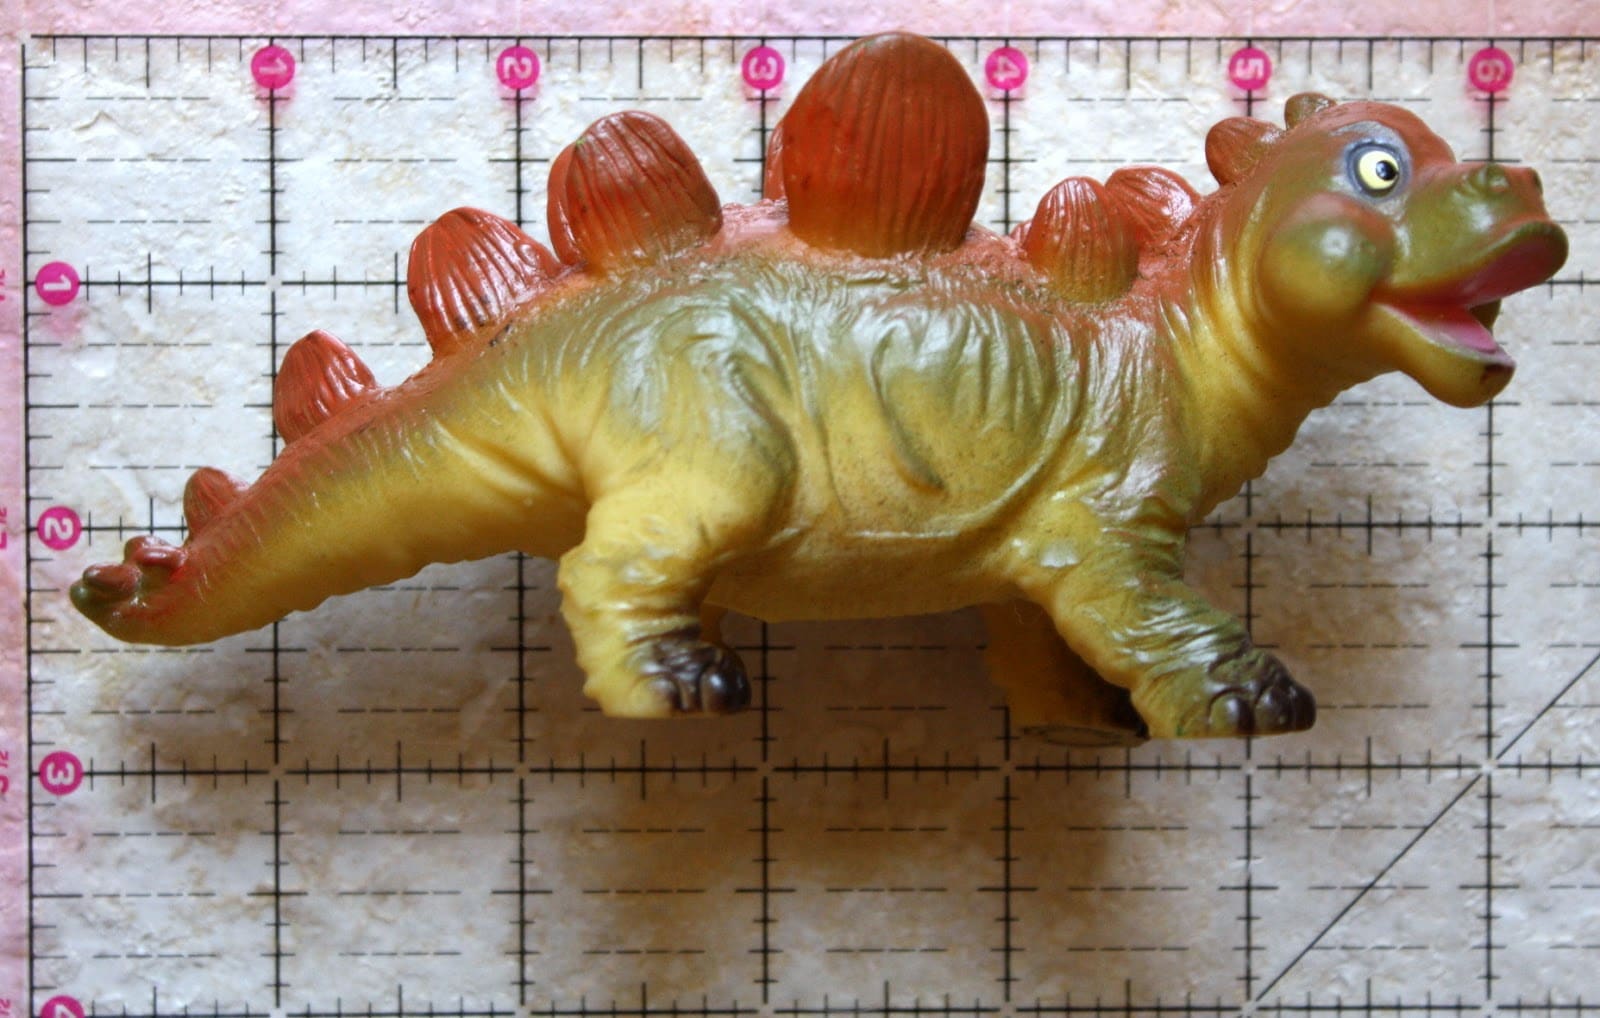 Dinosaur measurement activities